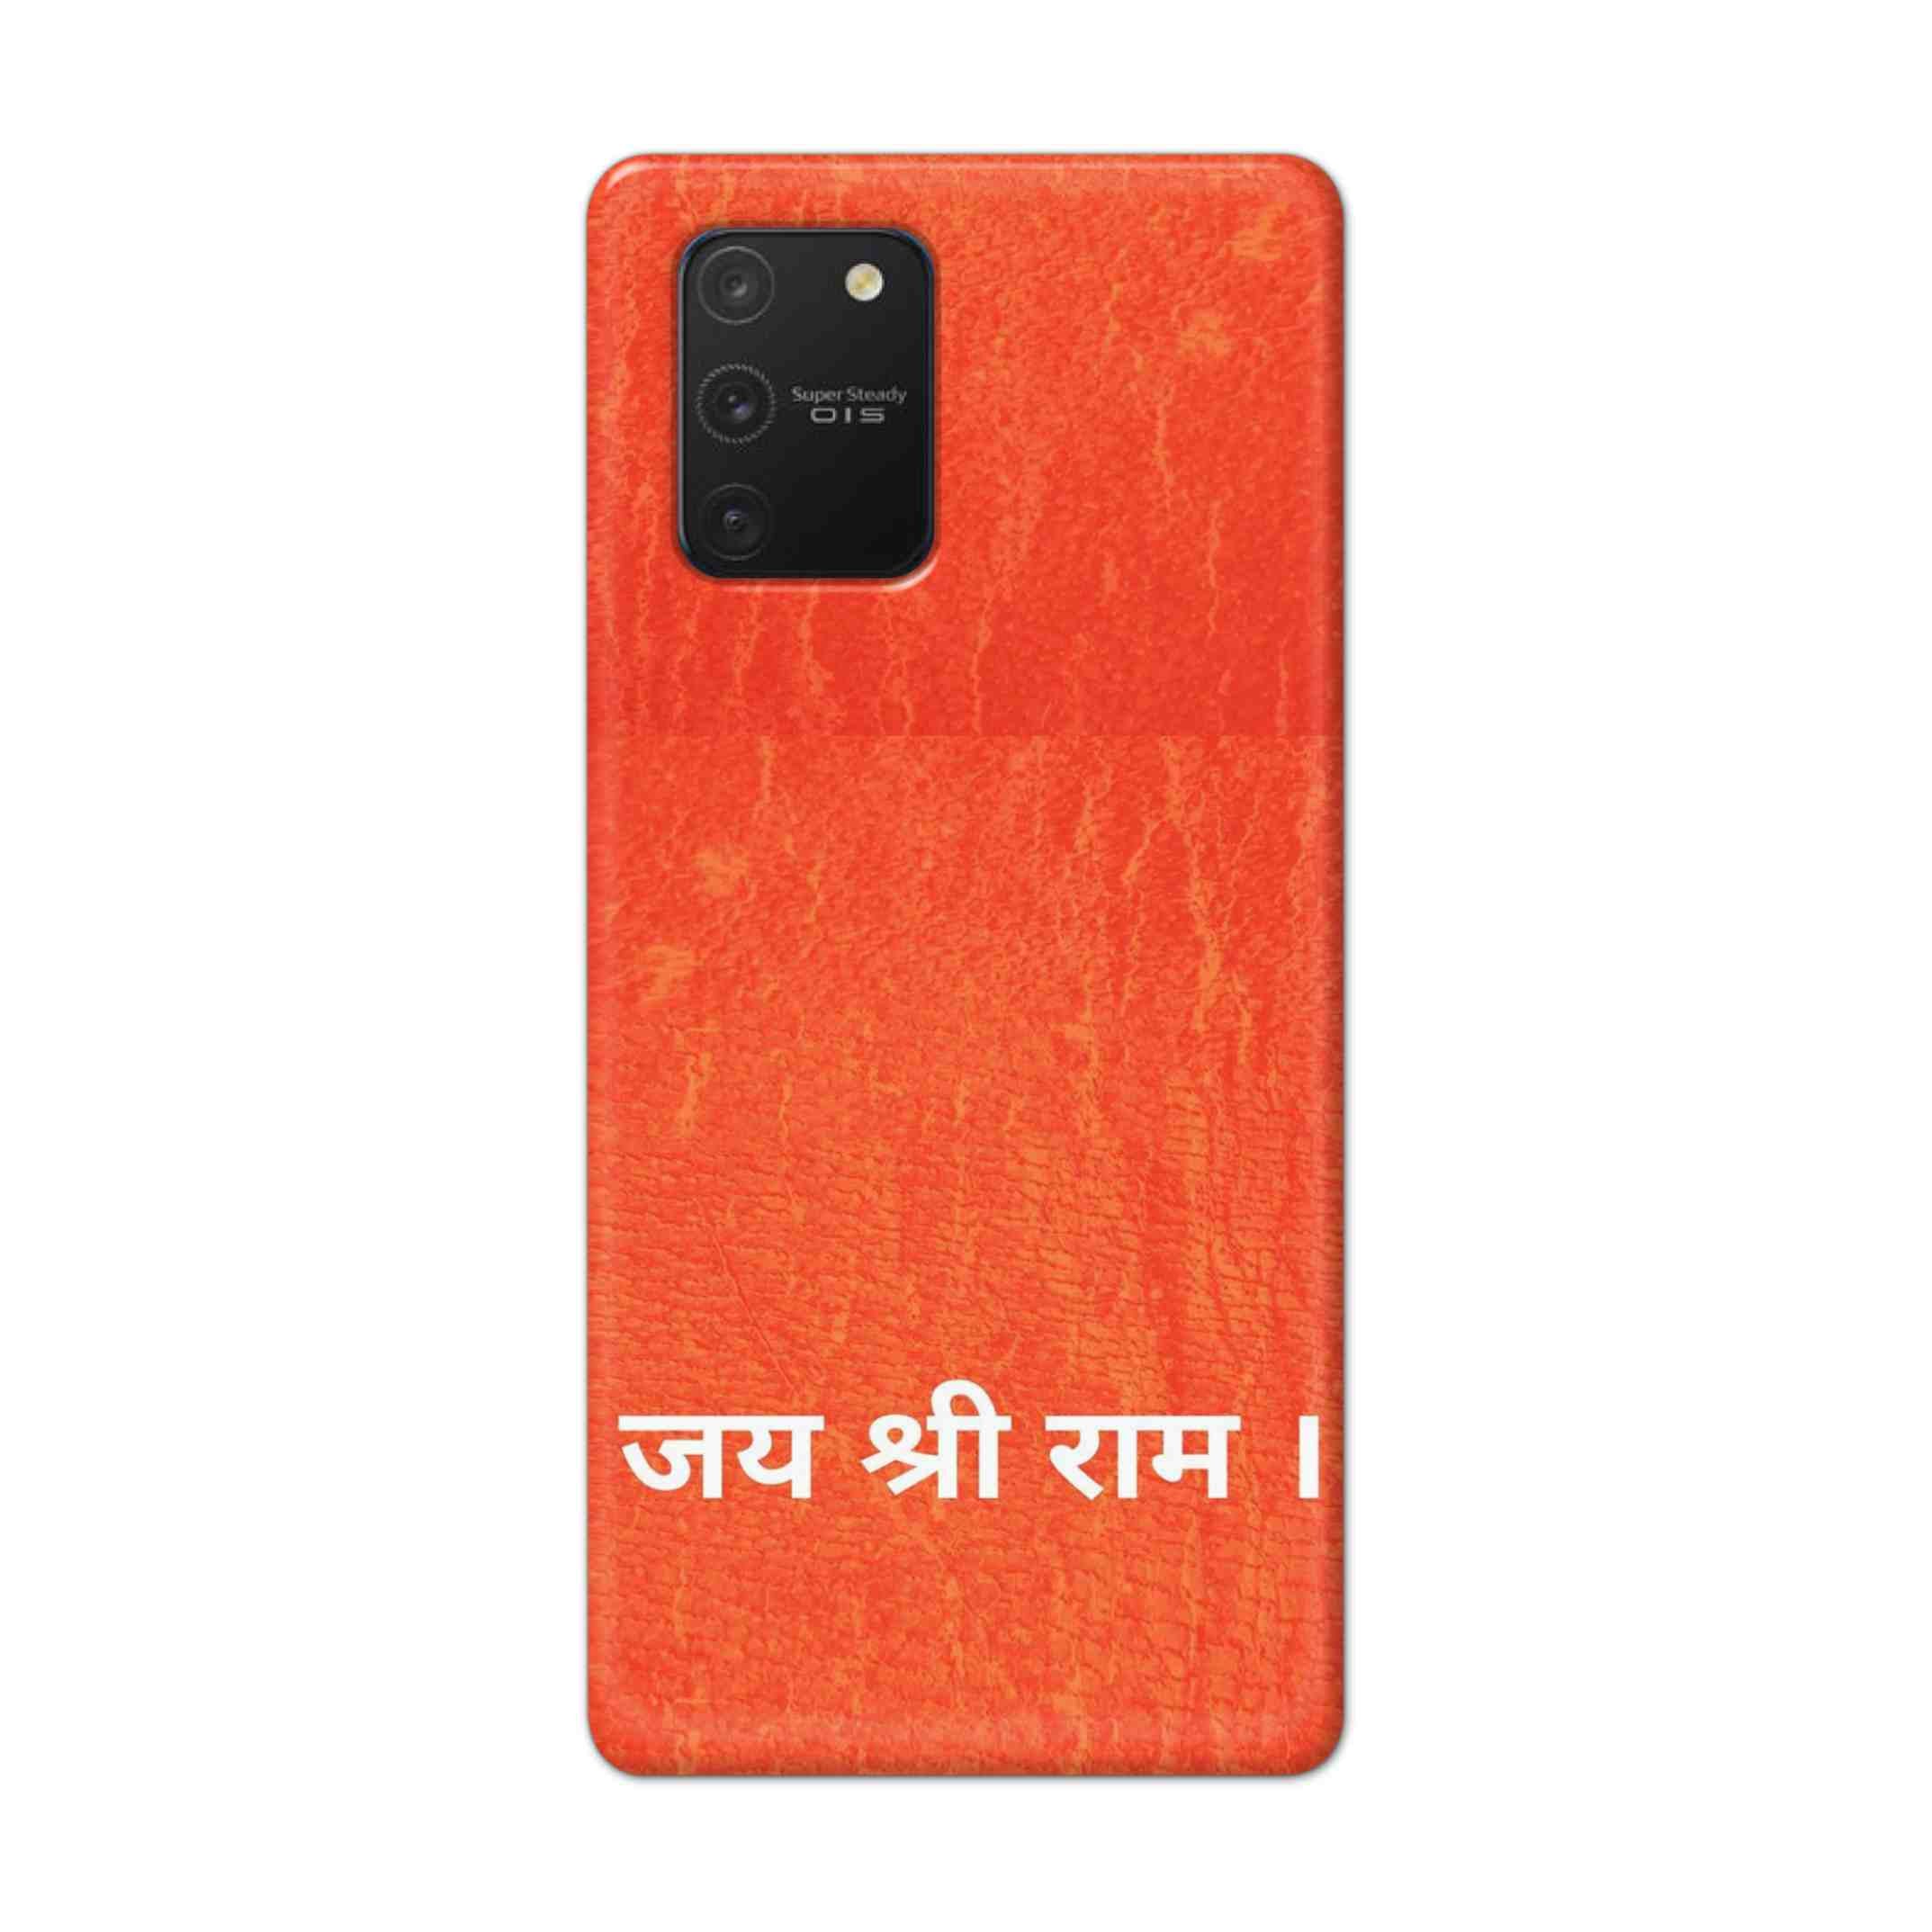 Buy Jai Shree Ram Hard Back Mobile Phone Case Cover For Samsung Galaxy S10 Lite Online